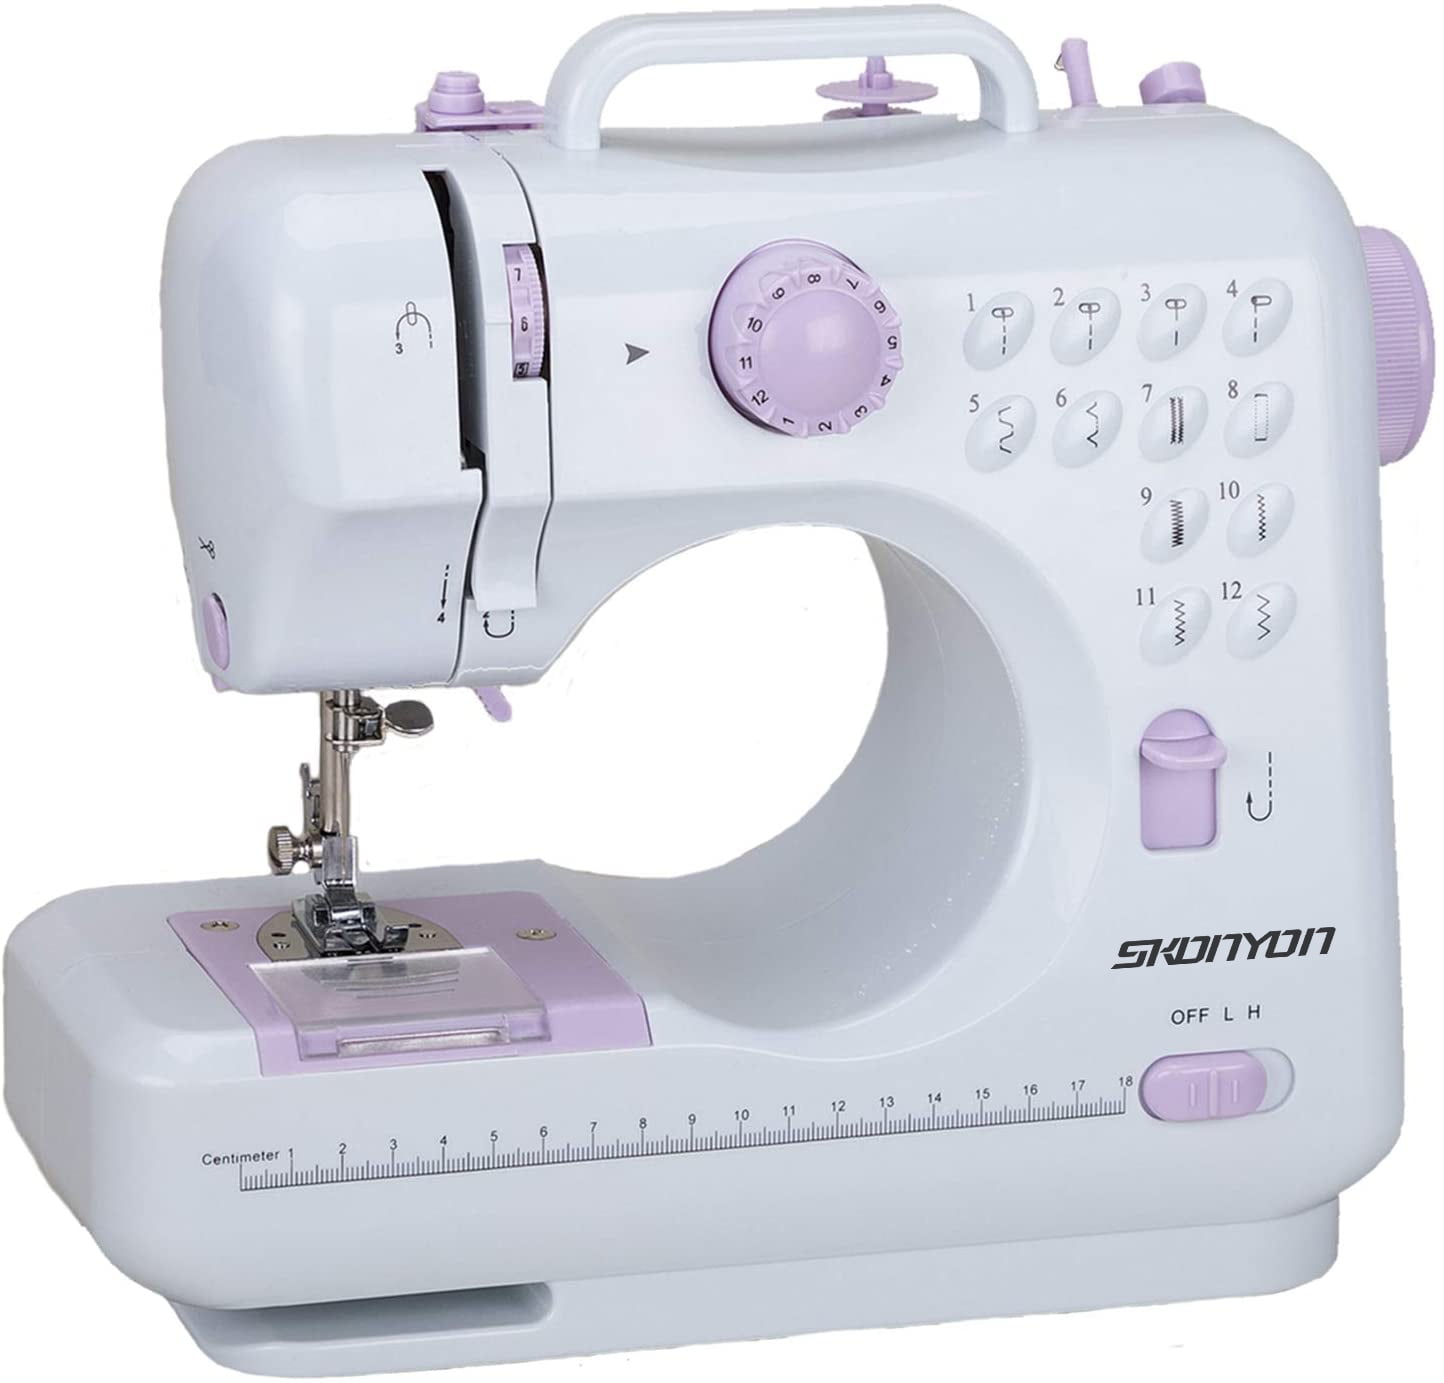 SKONYON Multi-functional Electric Sewing Machine 12 Stitch Portable Mini  Sewing Machine 2 Speed Foot Pedal